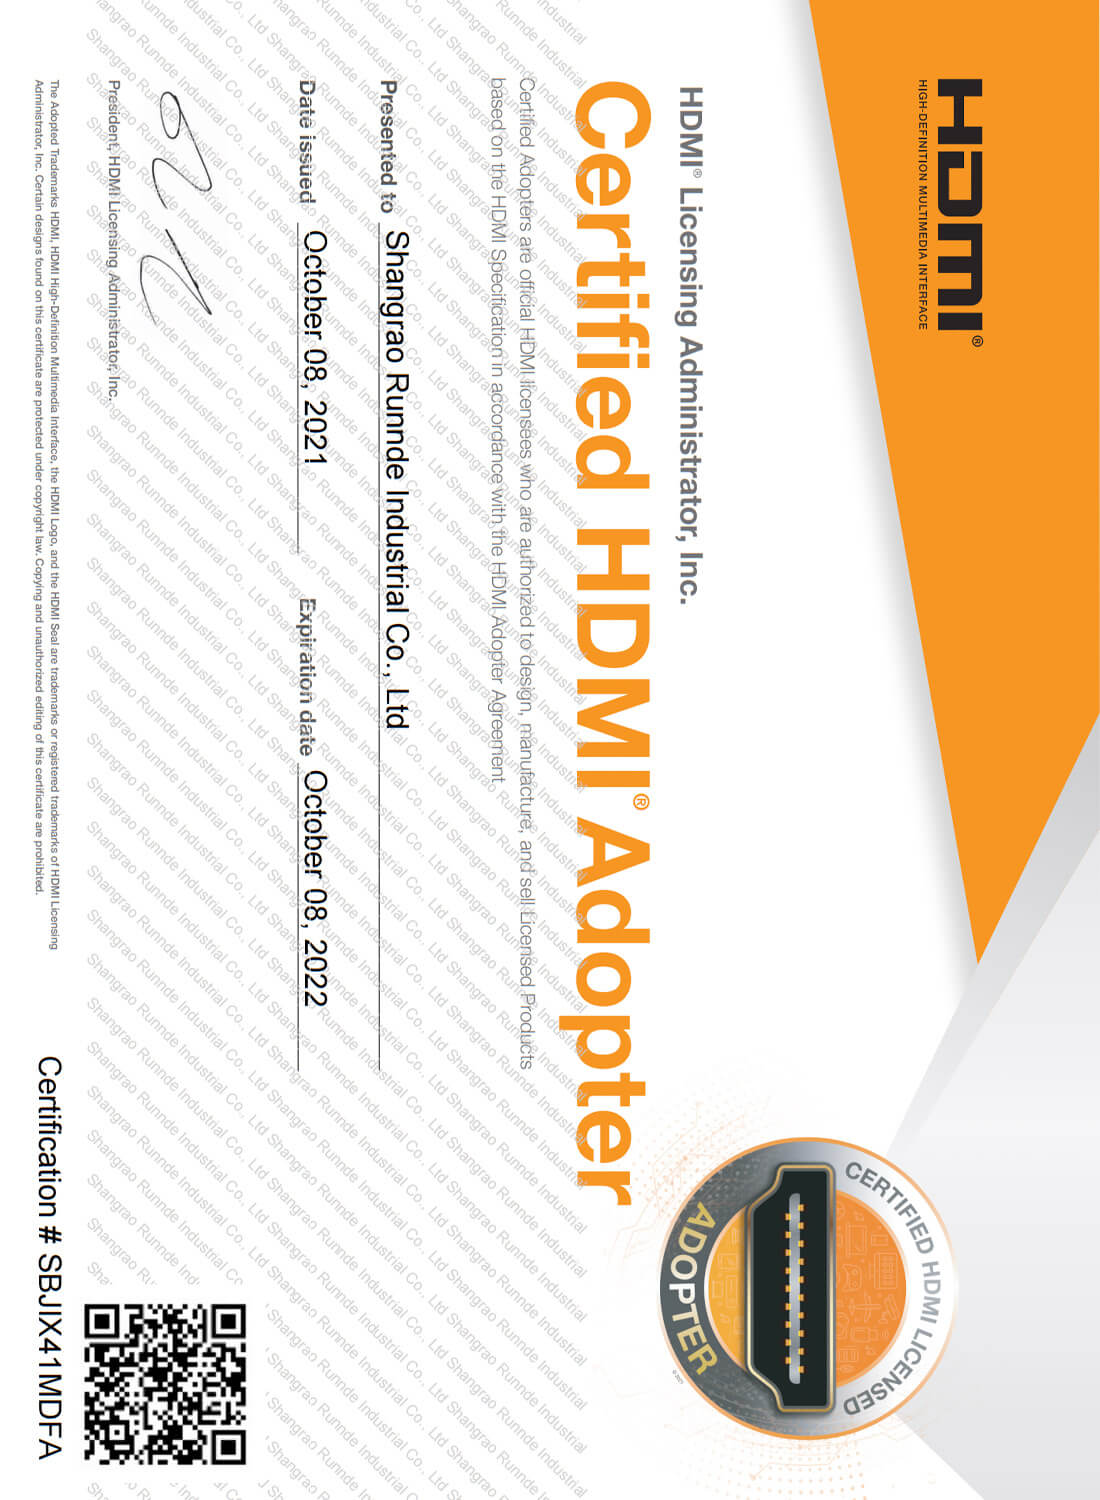 HDMI-Adaptor certification